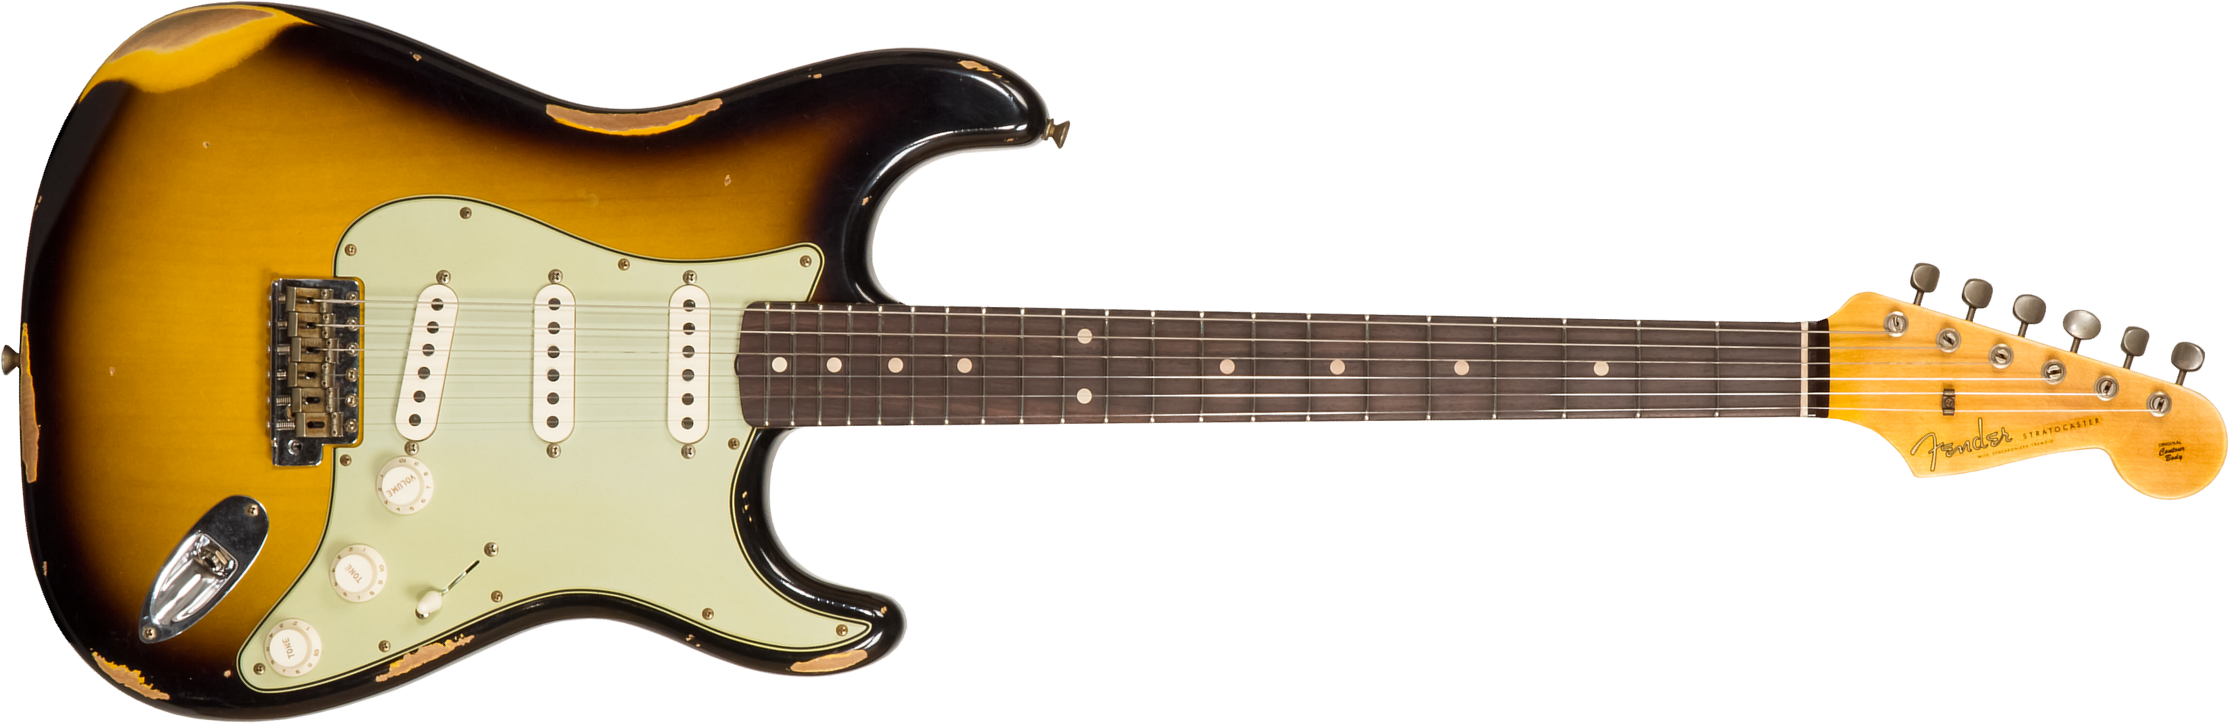 Fender Custom Shop Strat 1959 3s Trem Rw #r117661 - Relic 2-color Sunburst - Guitarra eléctrica con forma de str. - Main picture